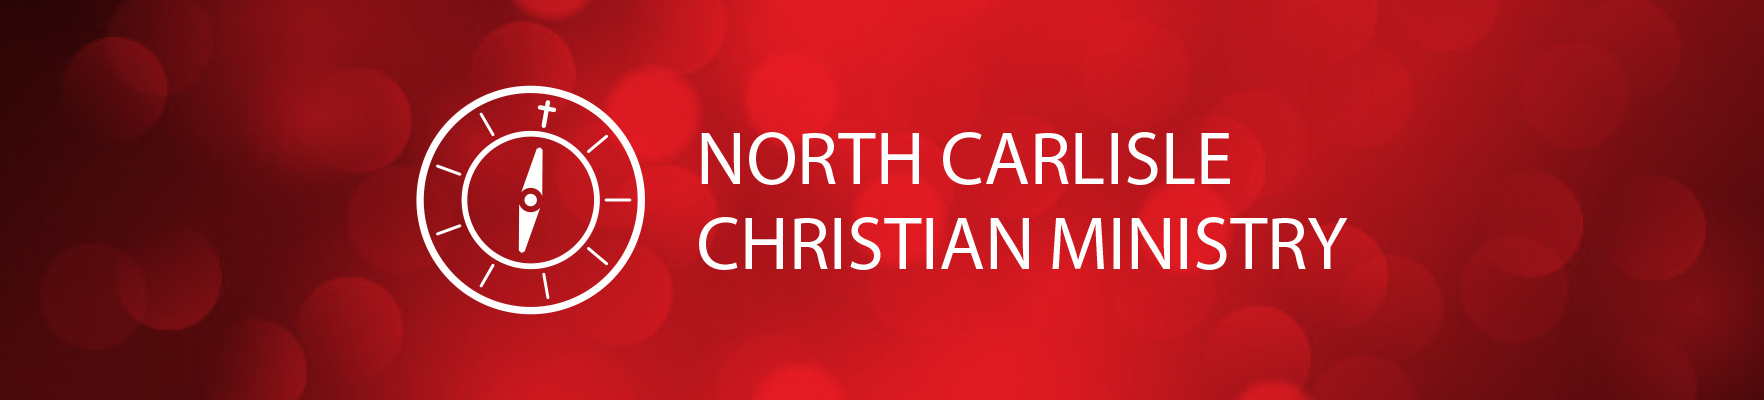 North Carlisle Christian Ministry (NCCM)